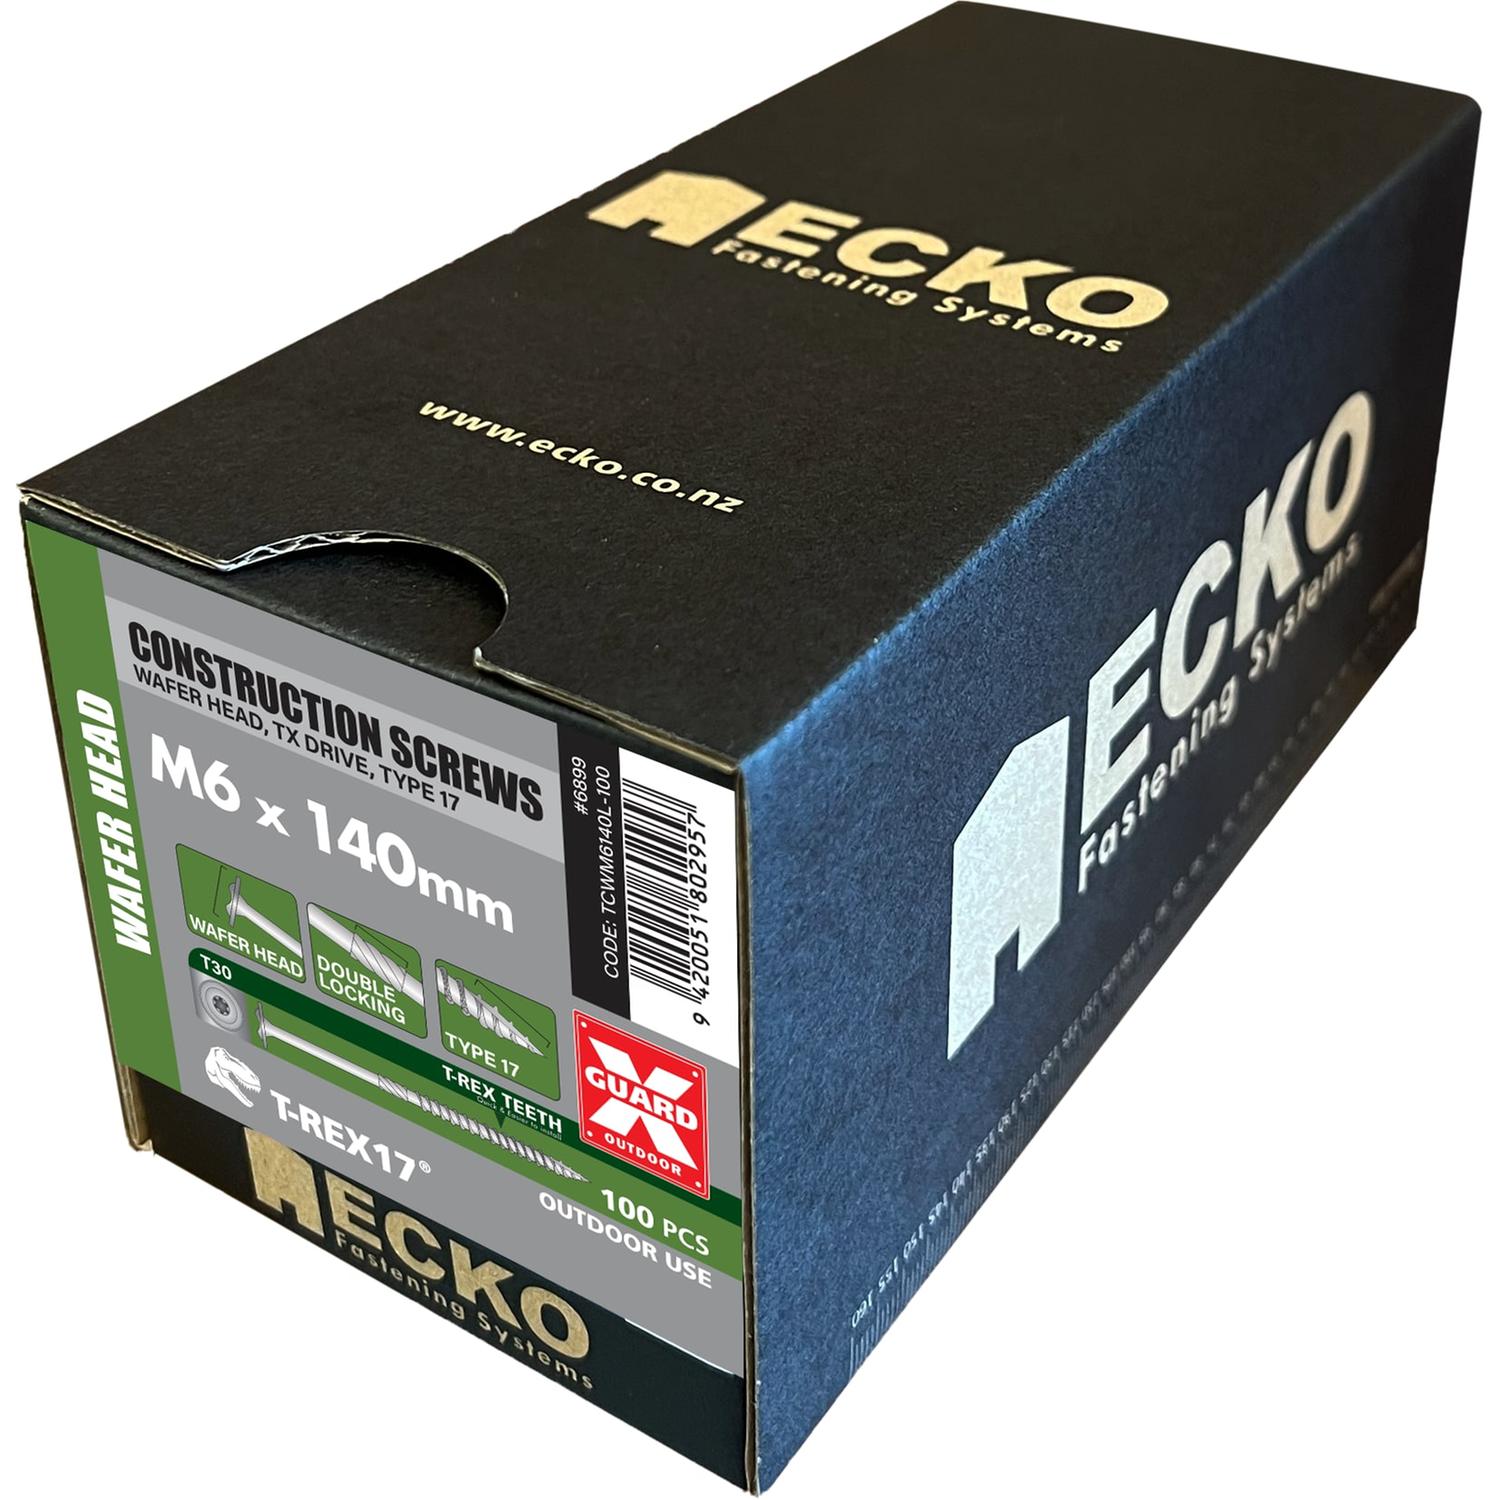 Ecko T-Rex17 Wafer Head Construction Screws M6 X 140Mm (500 Pack)